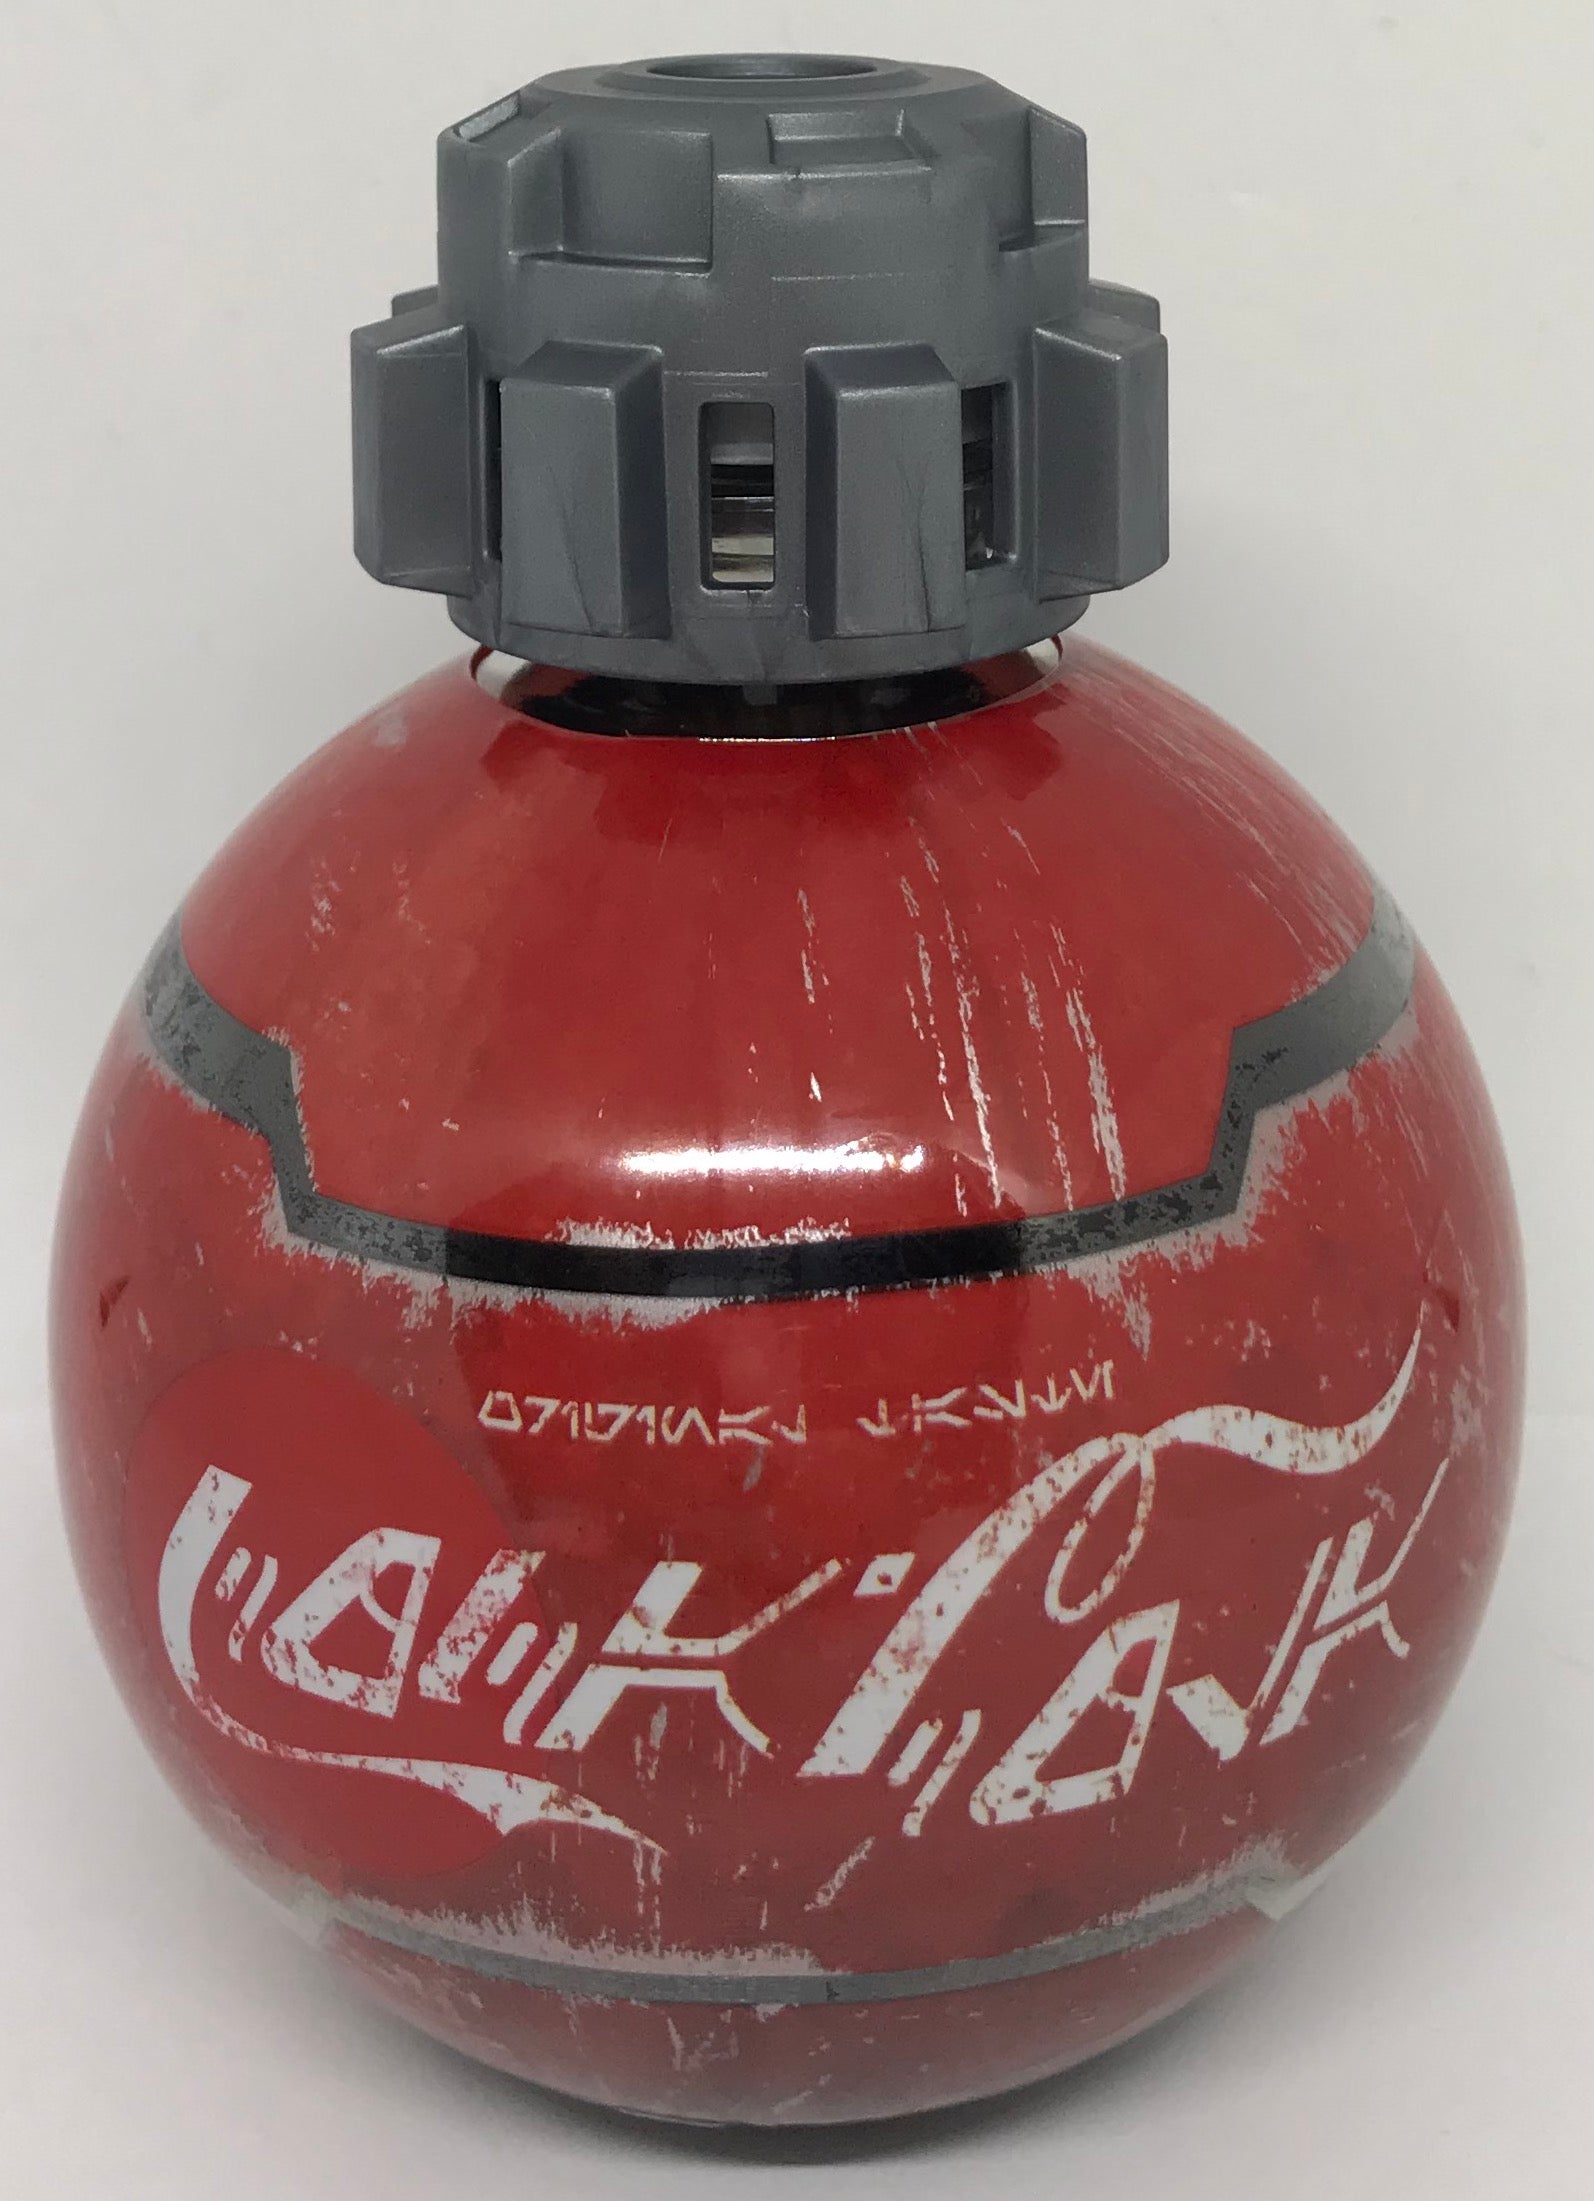 Disney Parks Coca Cola Coke Star Wars Galaxy Edge 13.5 Bottle Thermal Detonator - image 1 of 3